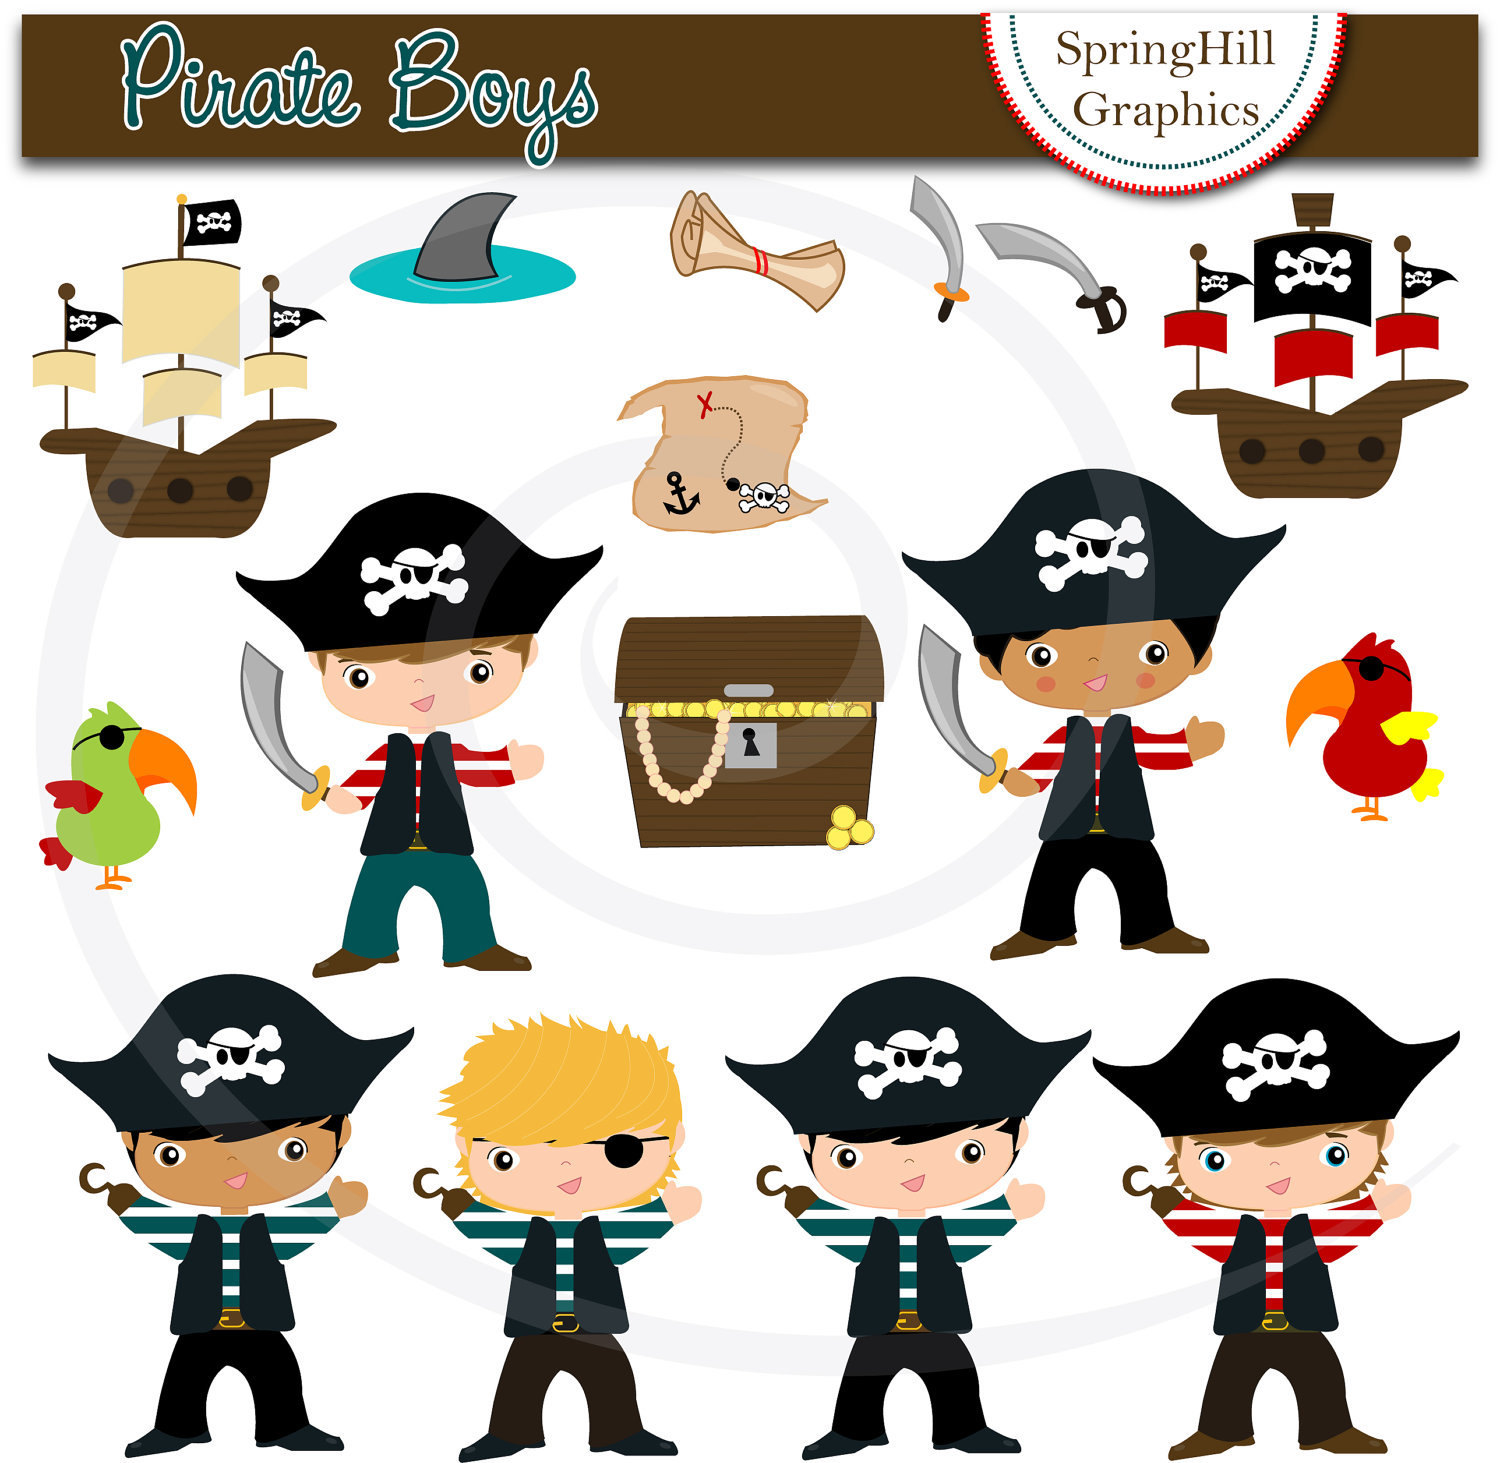 pirates clipart free | Pirate